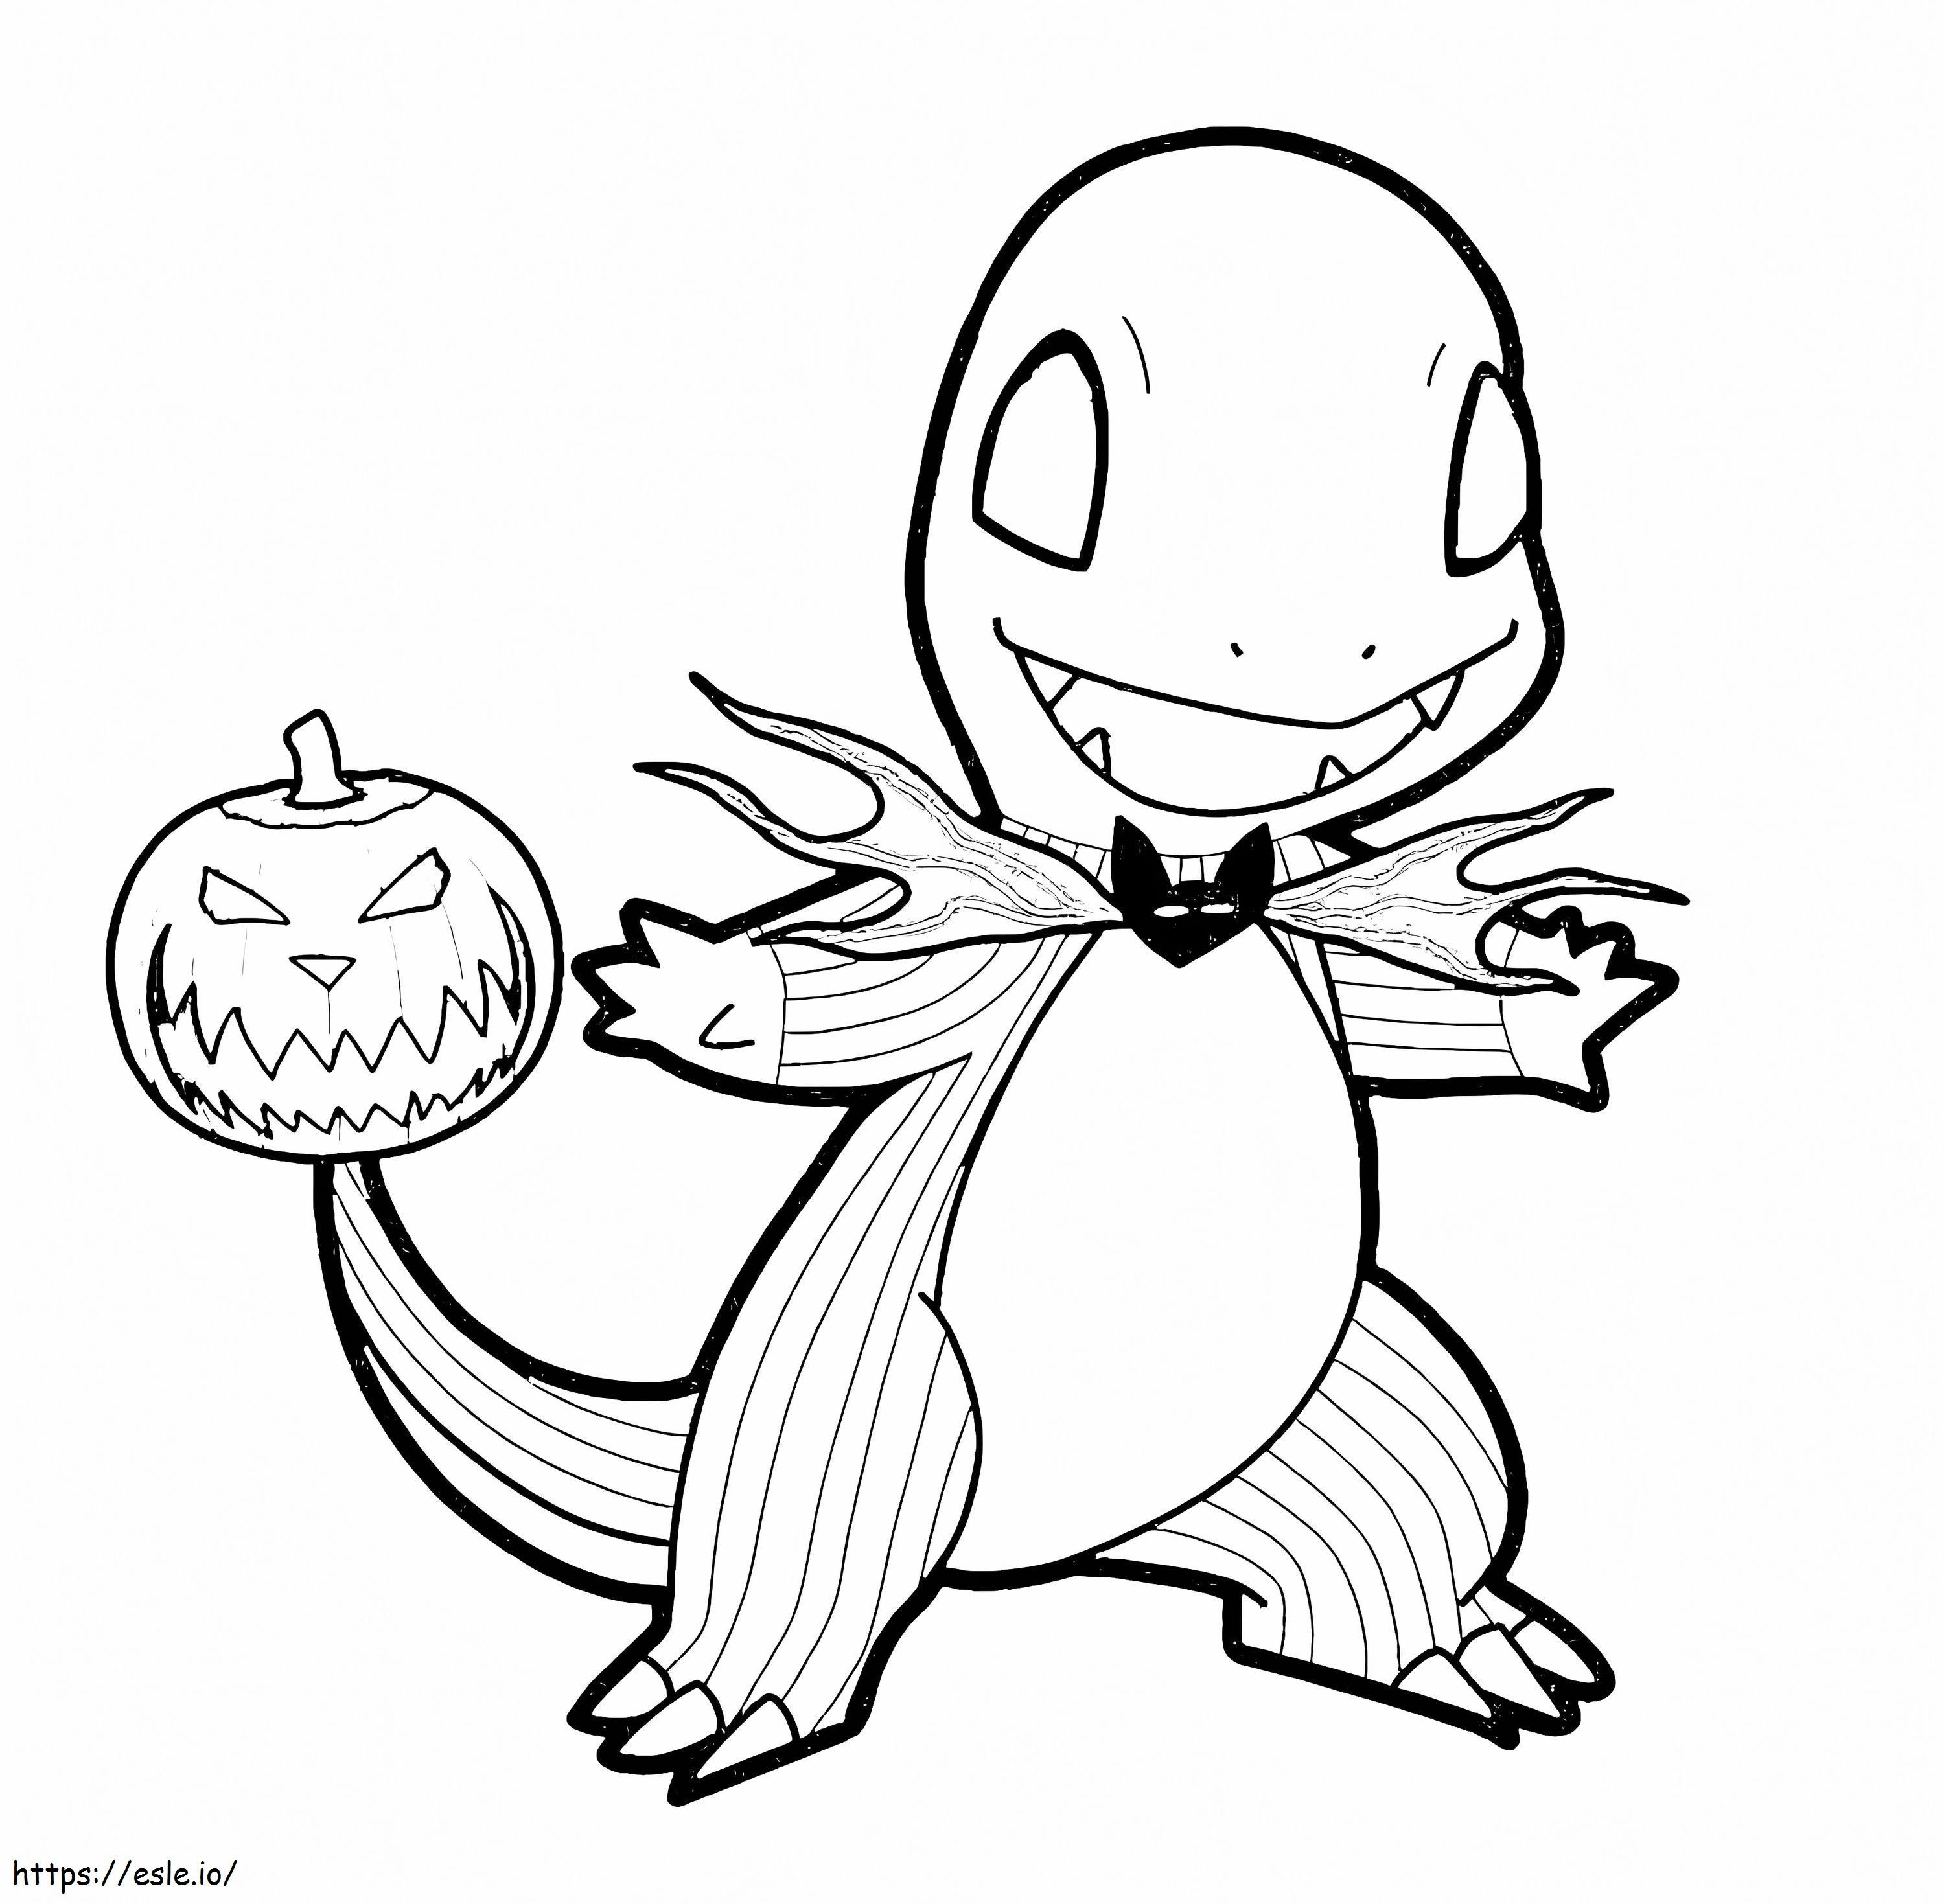 Charmander Pokemon Halloween coloring page